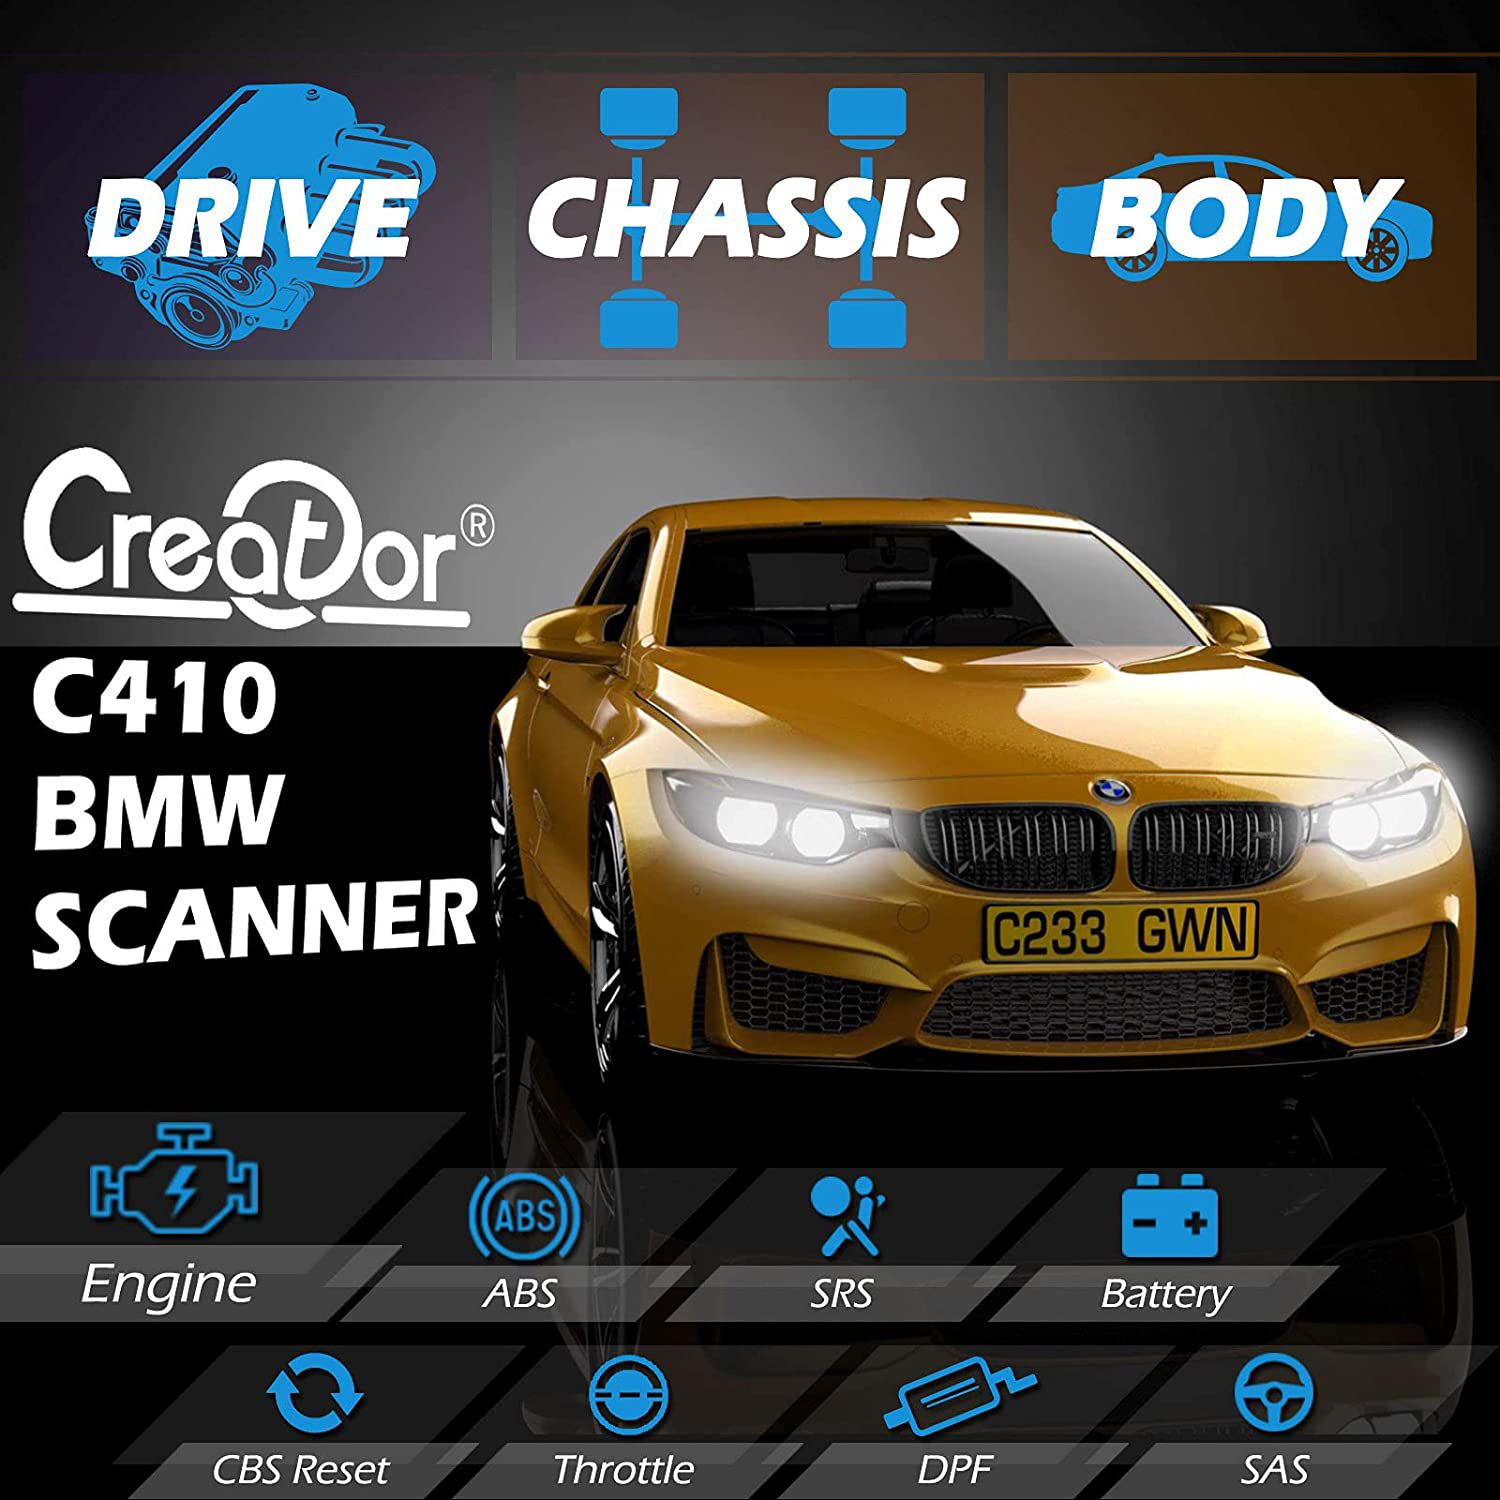 Schöpfer C410 Professional OBD2 Scanner Code Reader für BMW Mini Cooper Scan Tool Multi-System Diagnose Scan Tool mit ABS